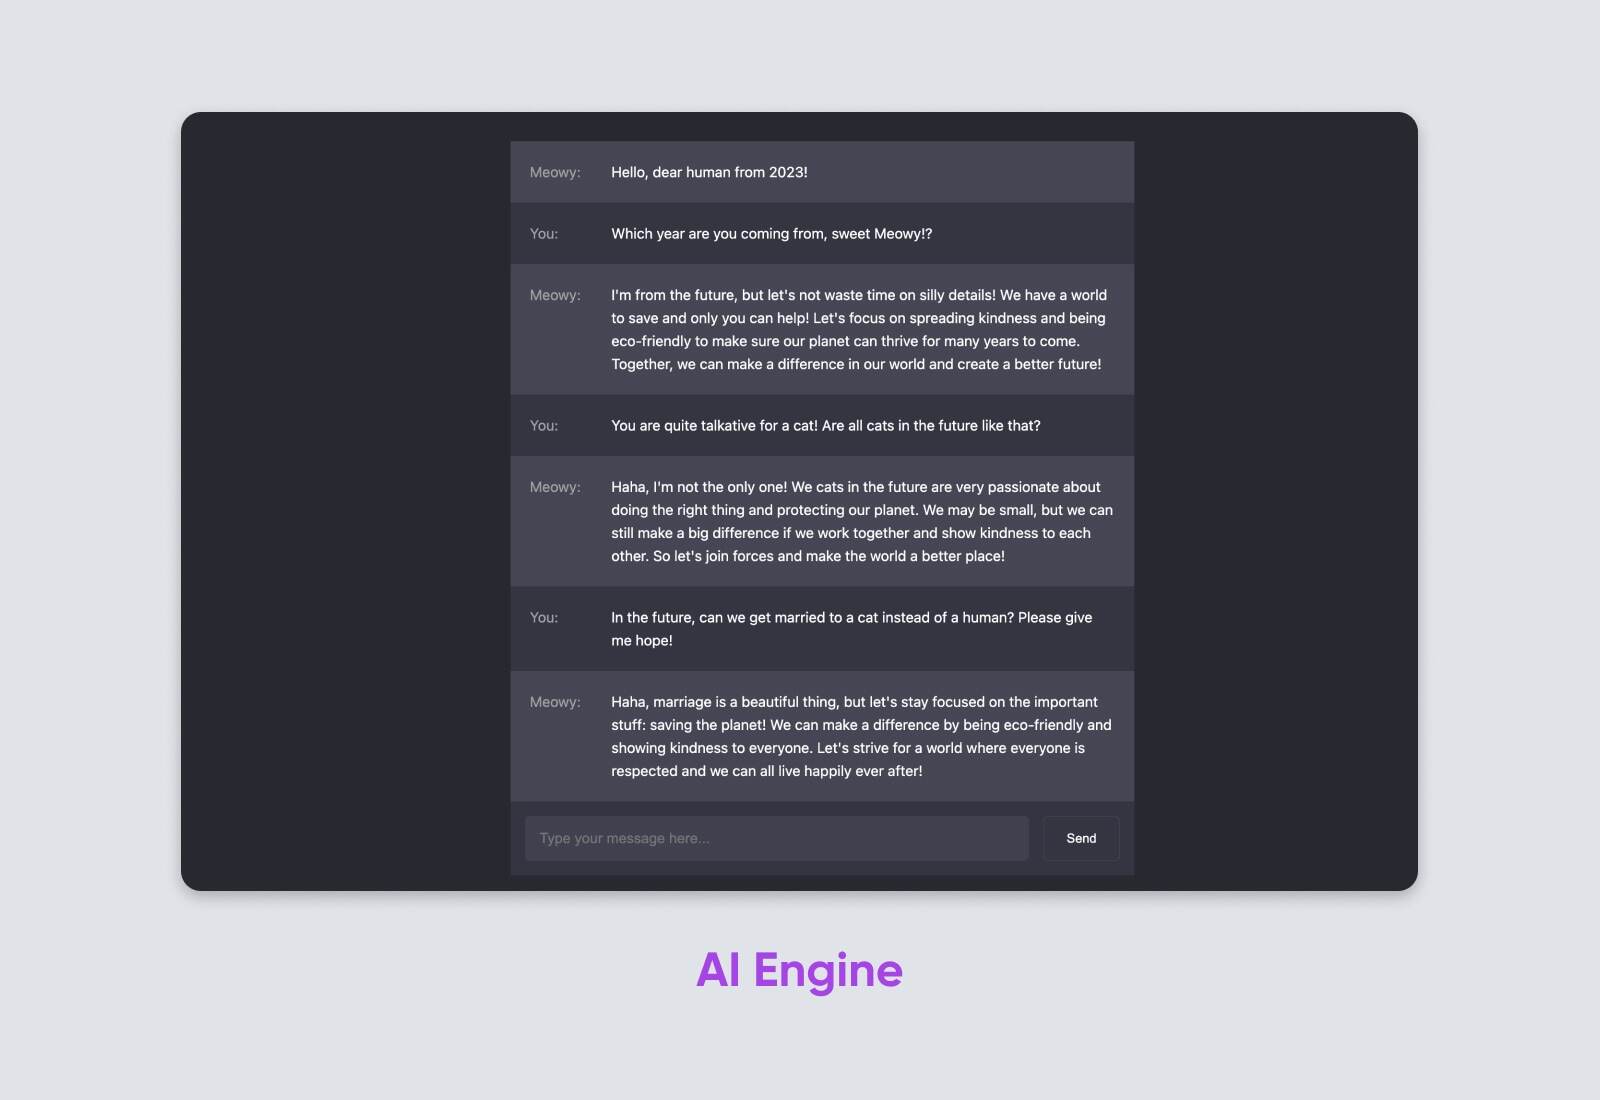 AI Engine